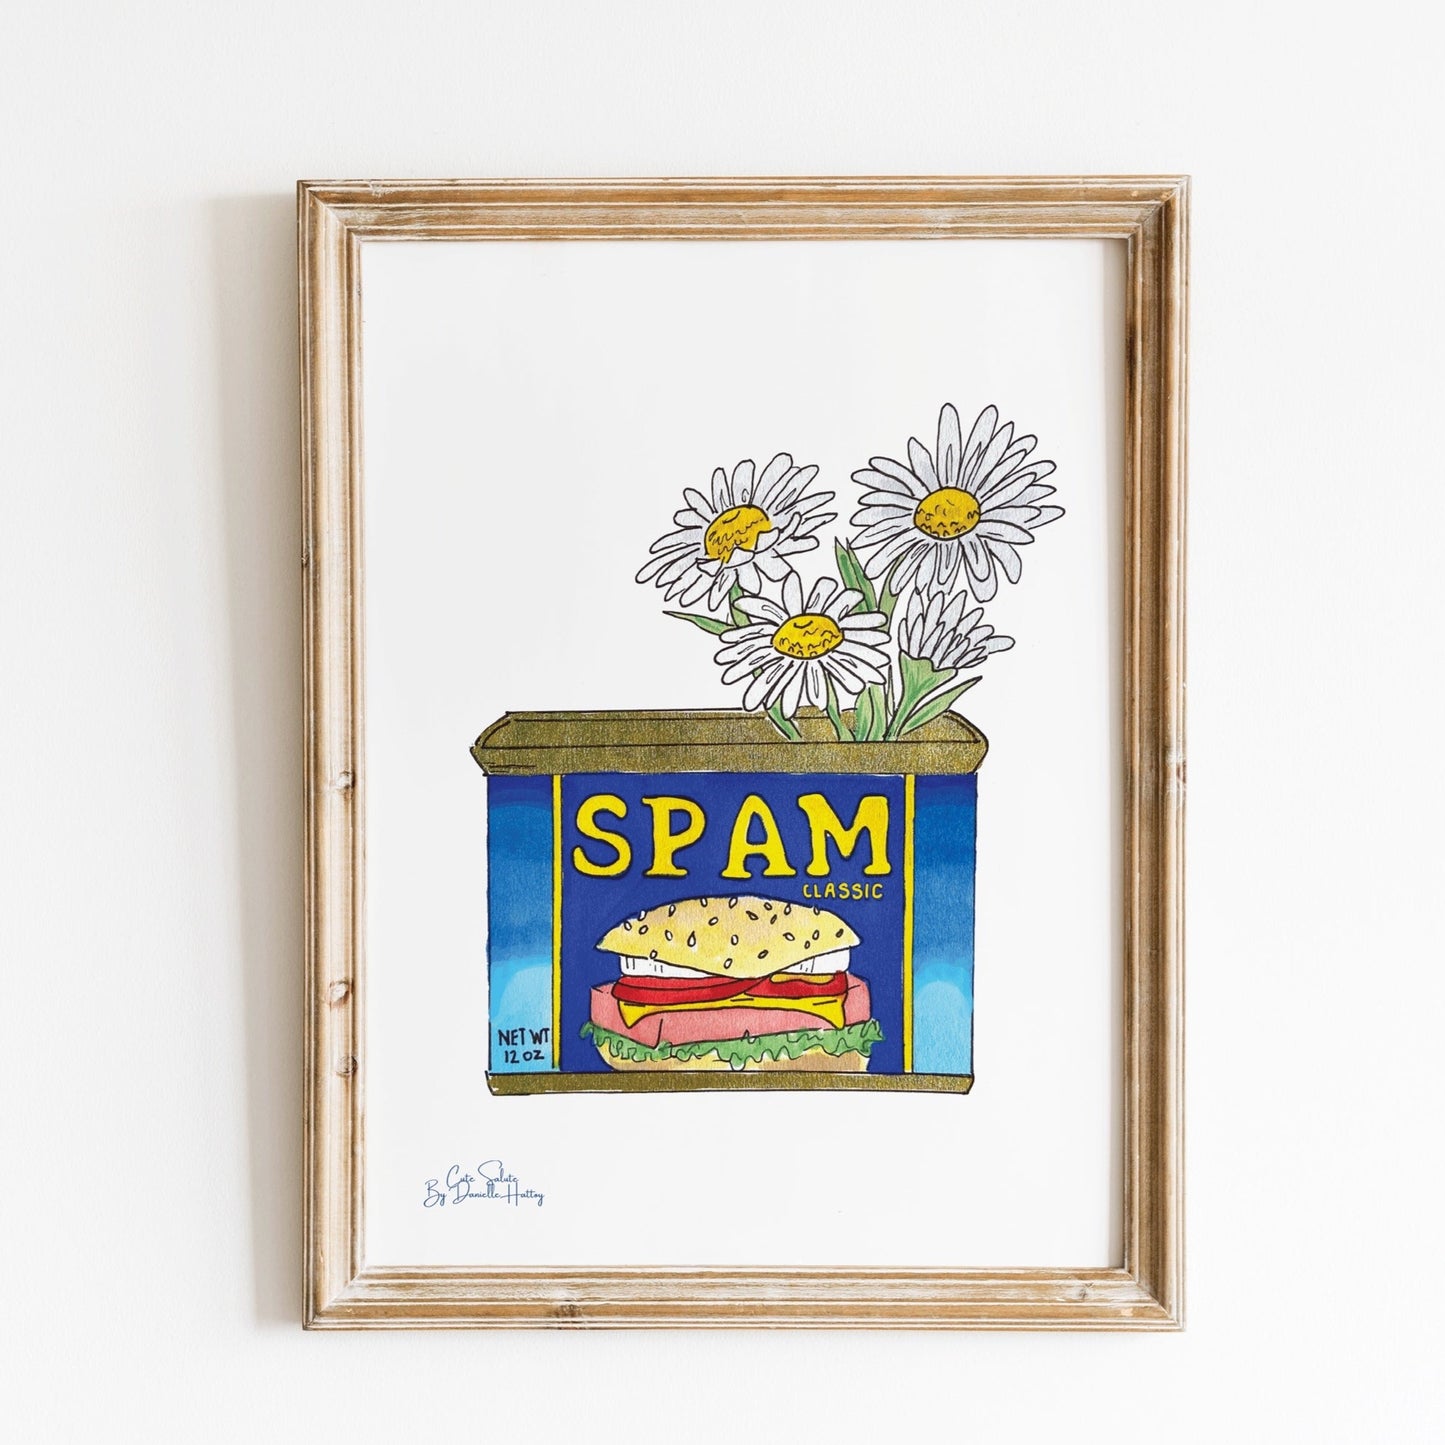 Spam Daisy Illustrated Wall Art Print